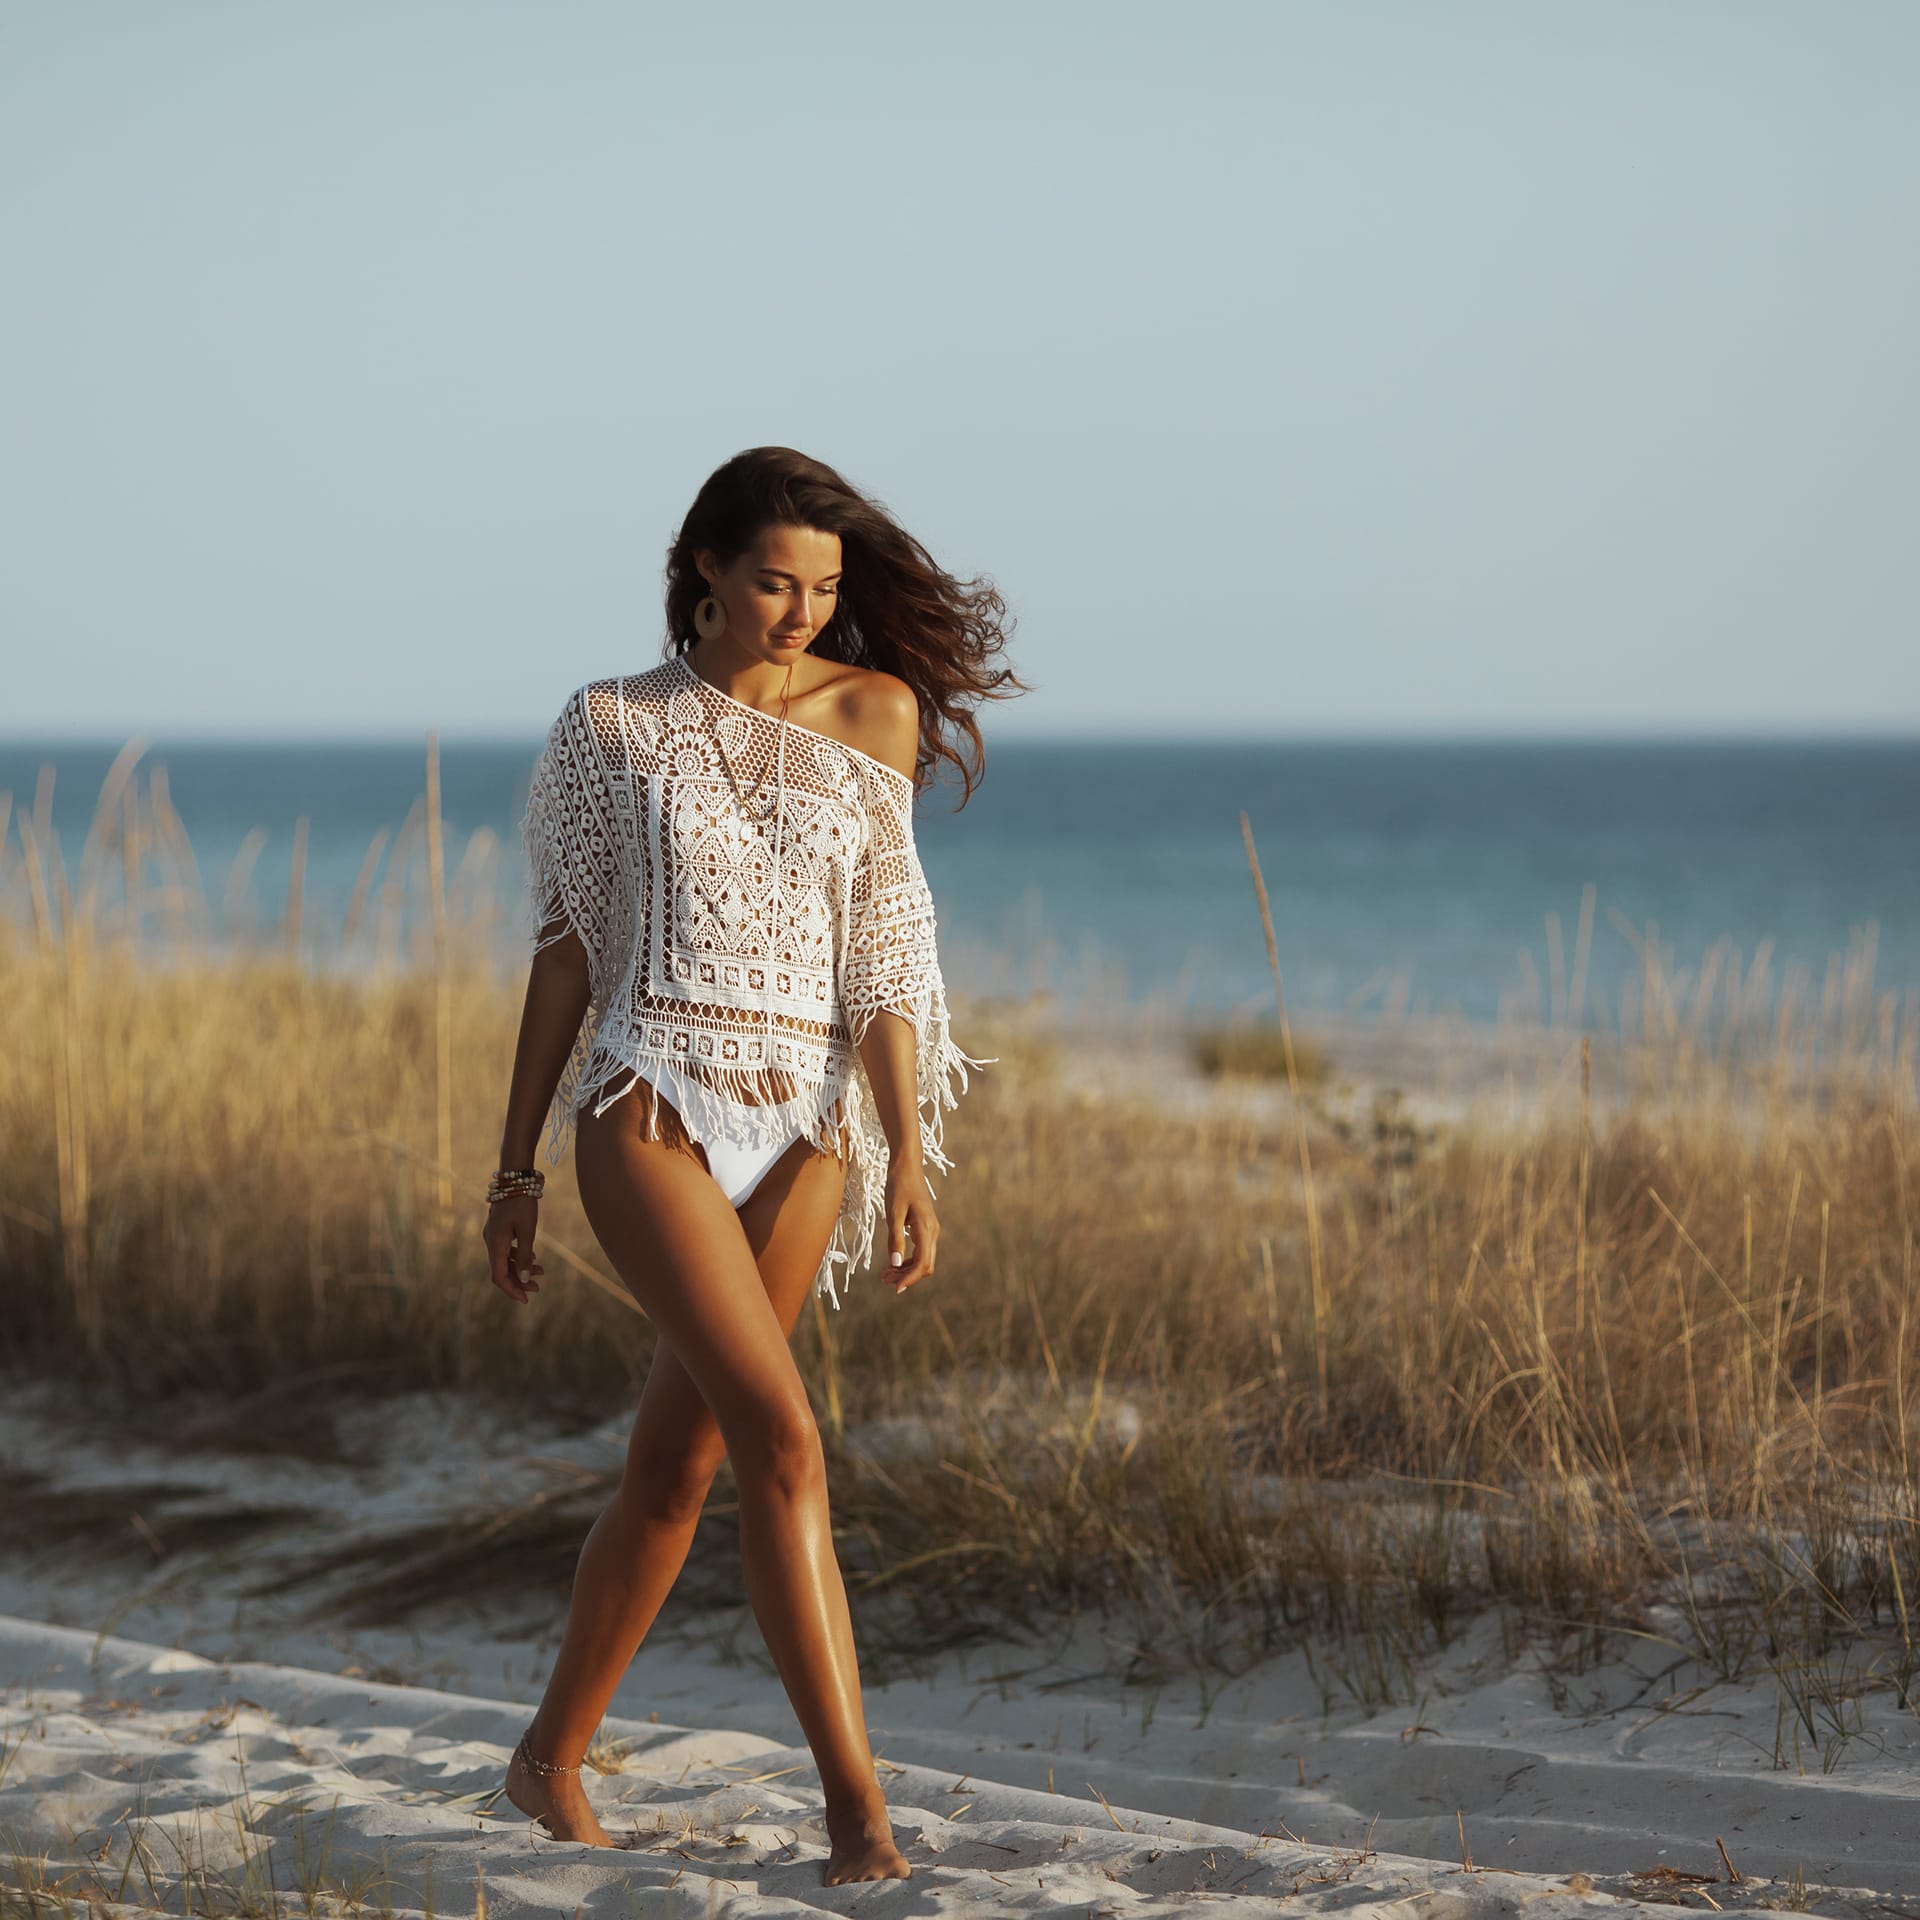 Woman walking beach during vacation beautiful beach photos